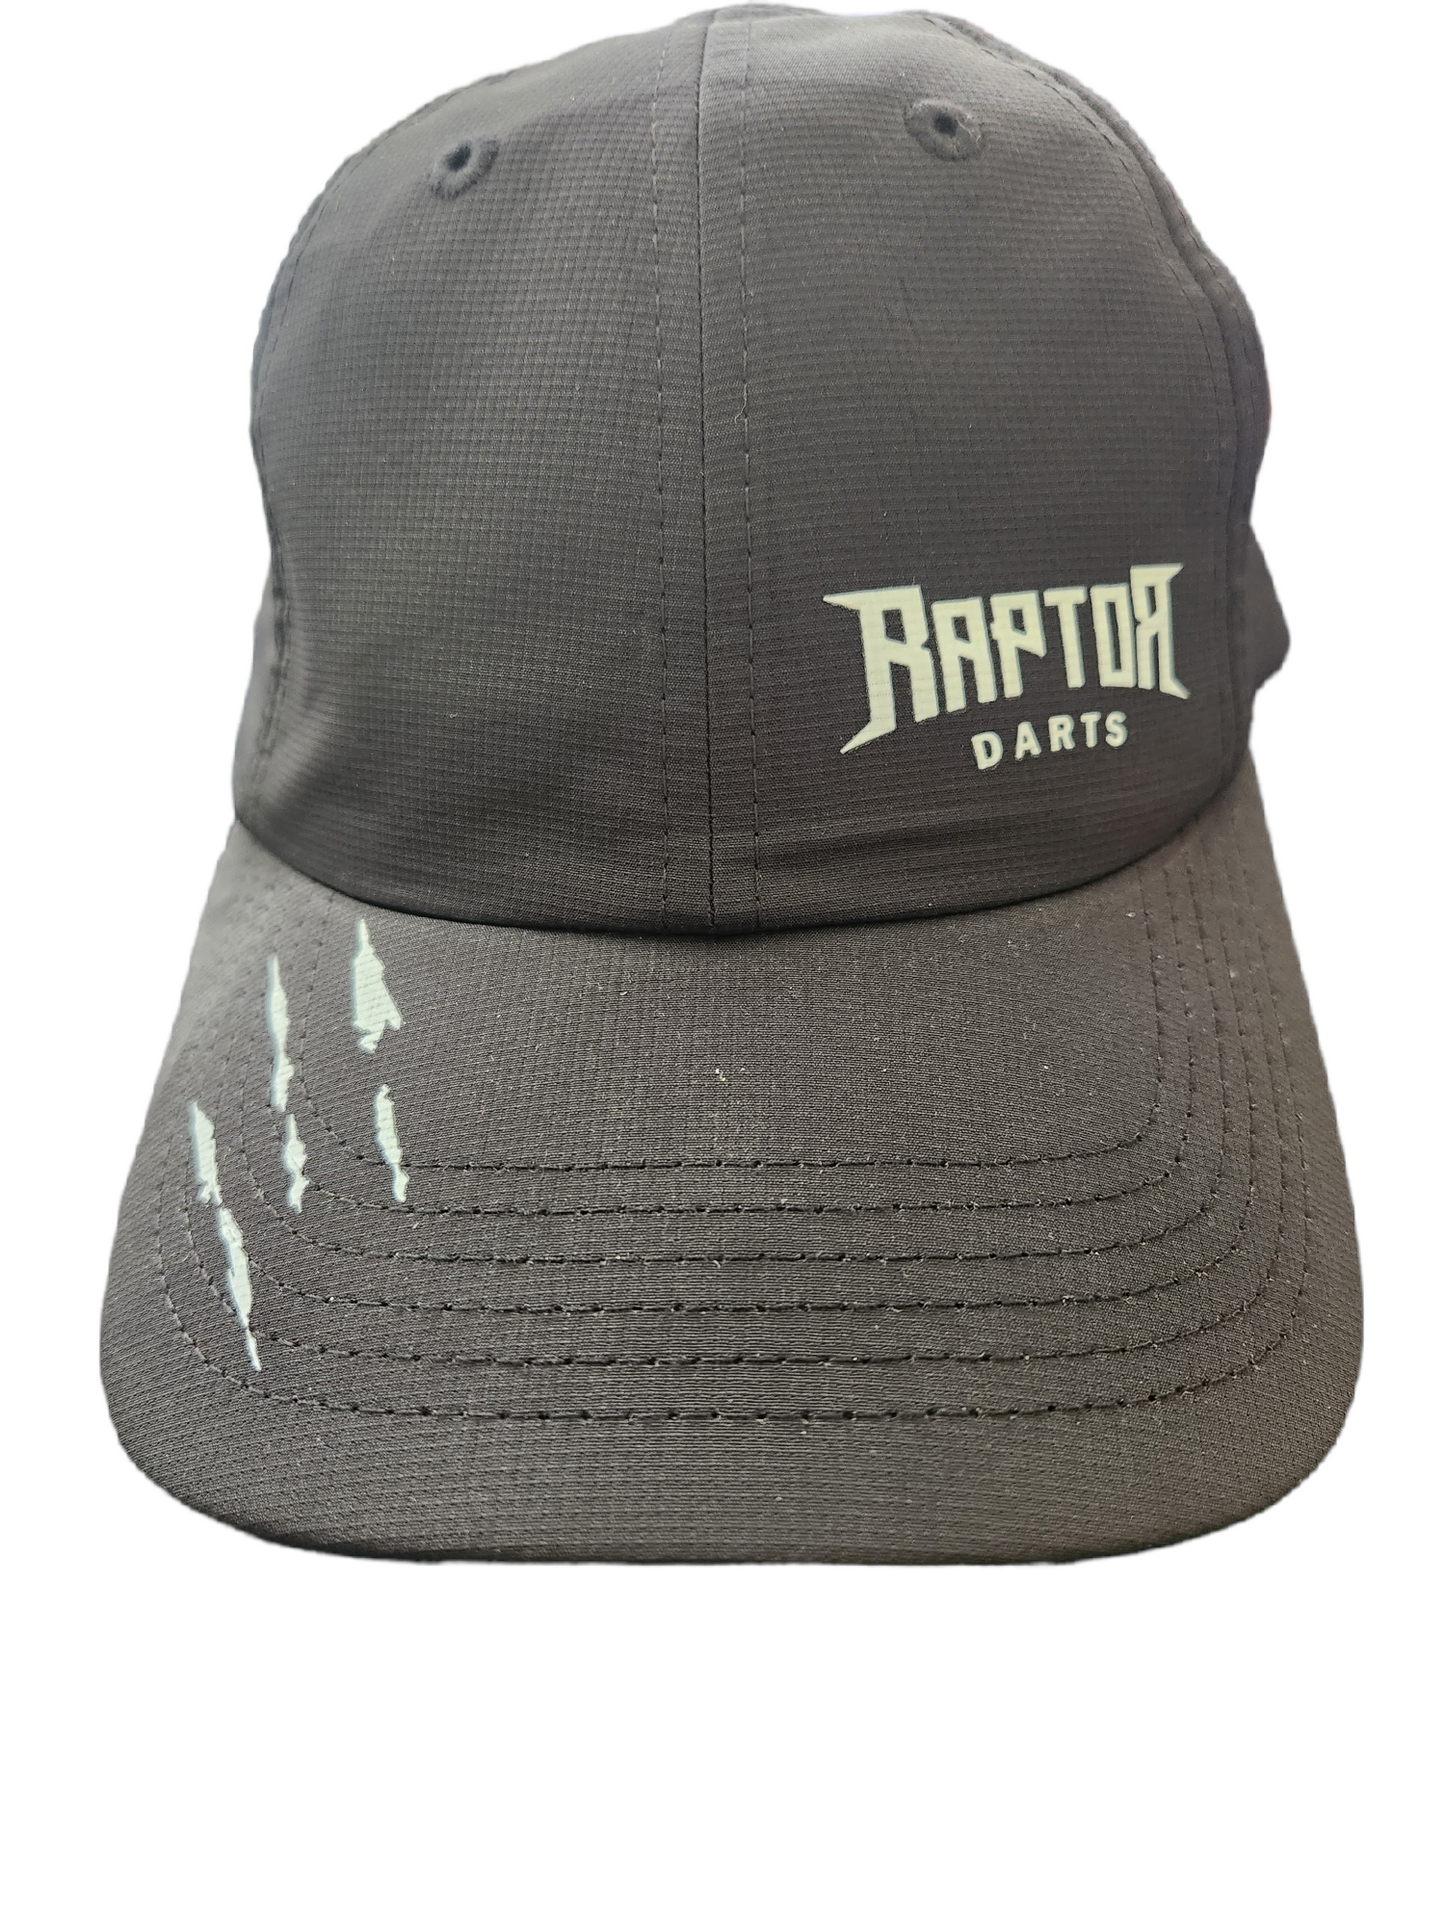 Raptor Darts Hats